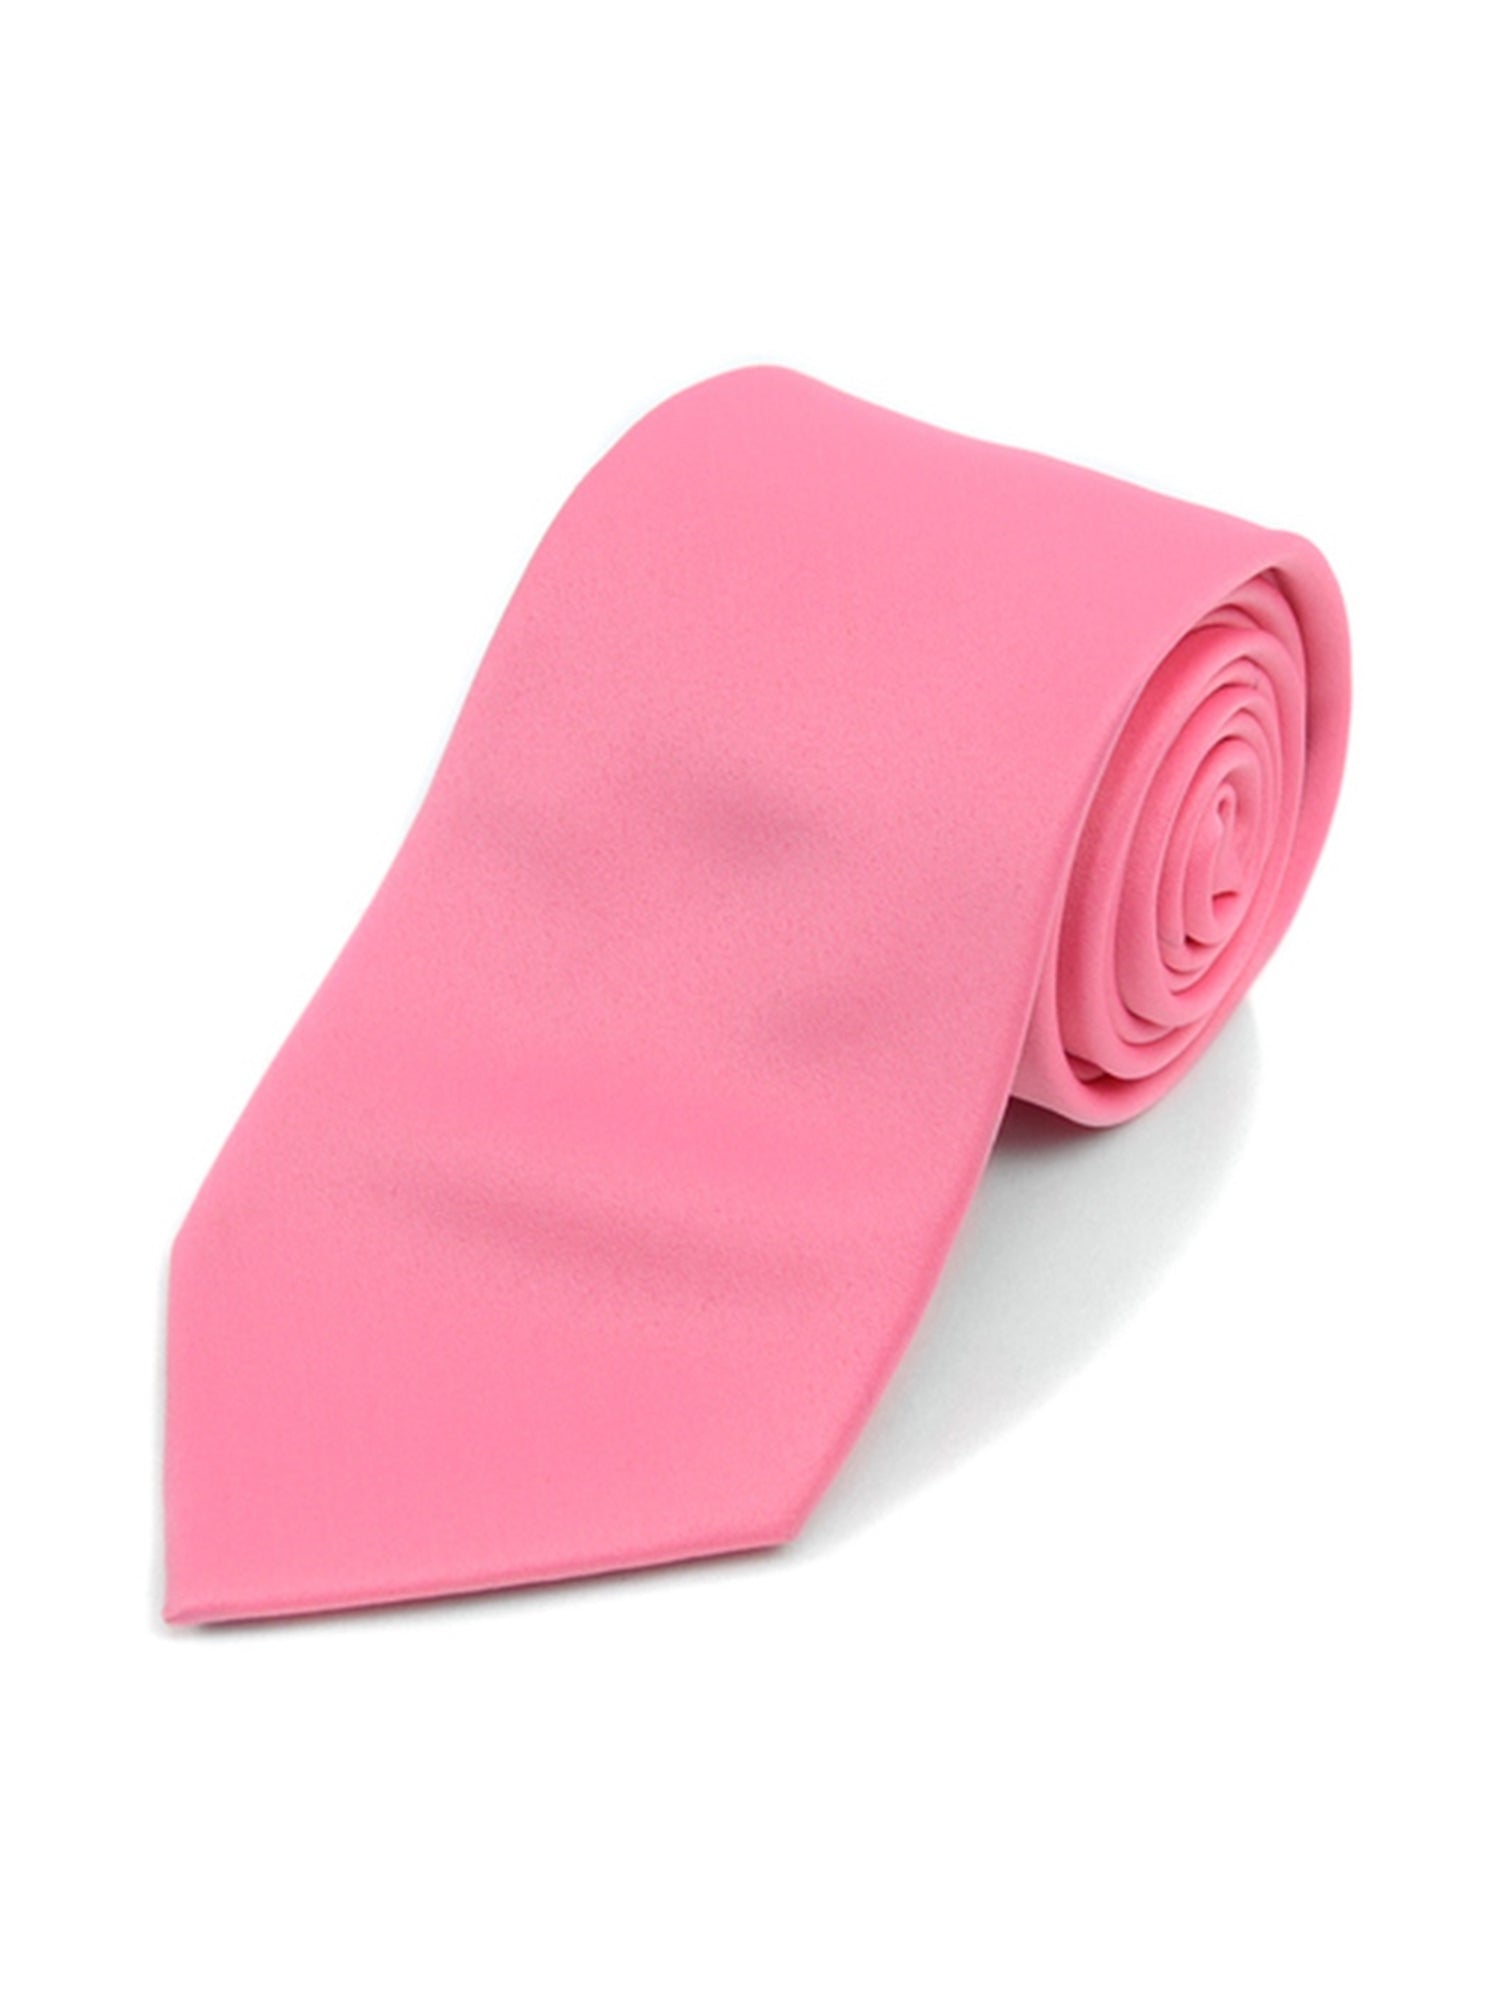 Boy's Age 12-18 Solid Color Poly Neck Tie Boy's Solid Color Neck Tie TheDapperTie Hot Pink 49" 